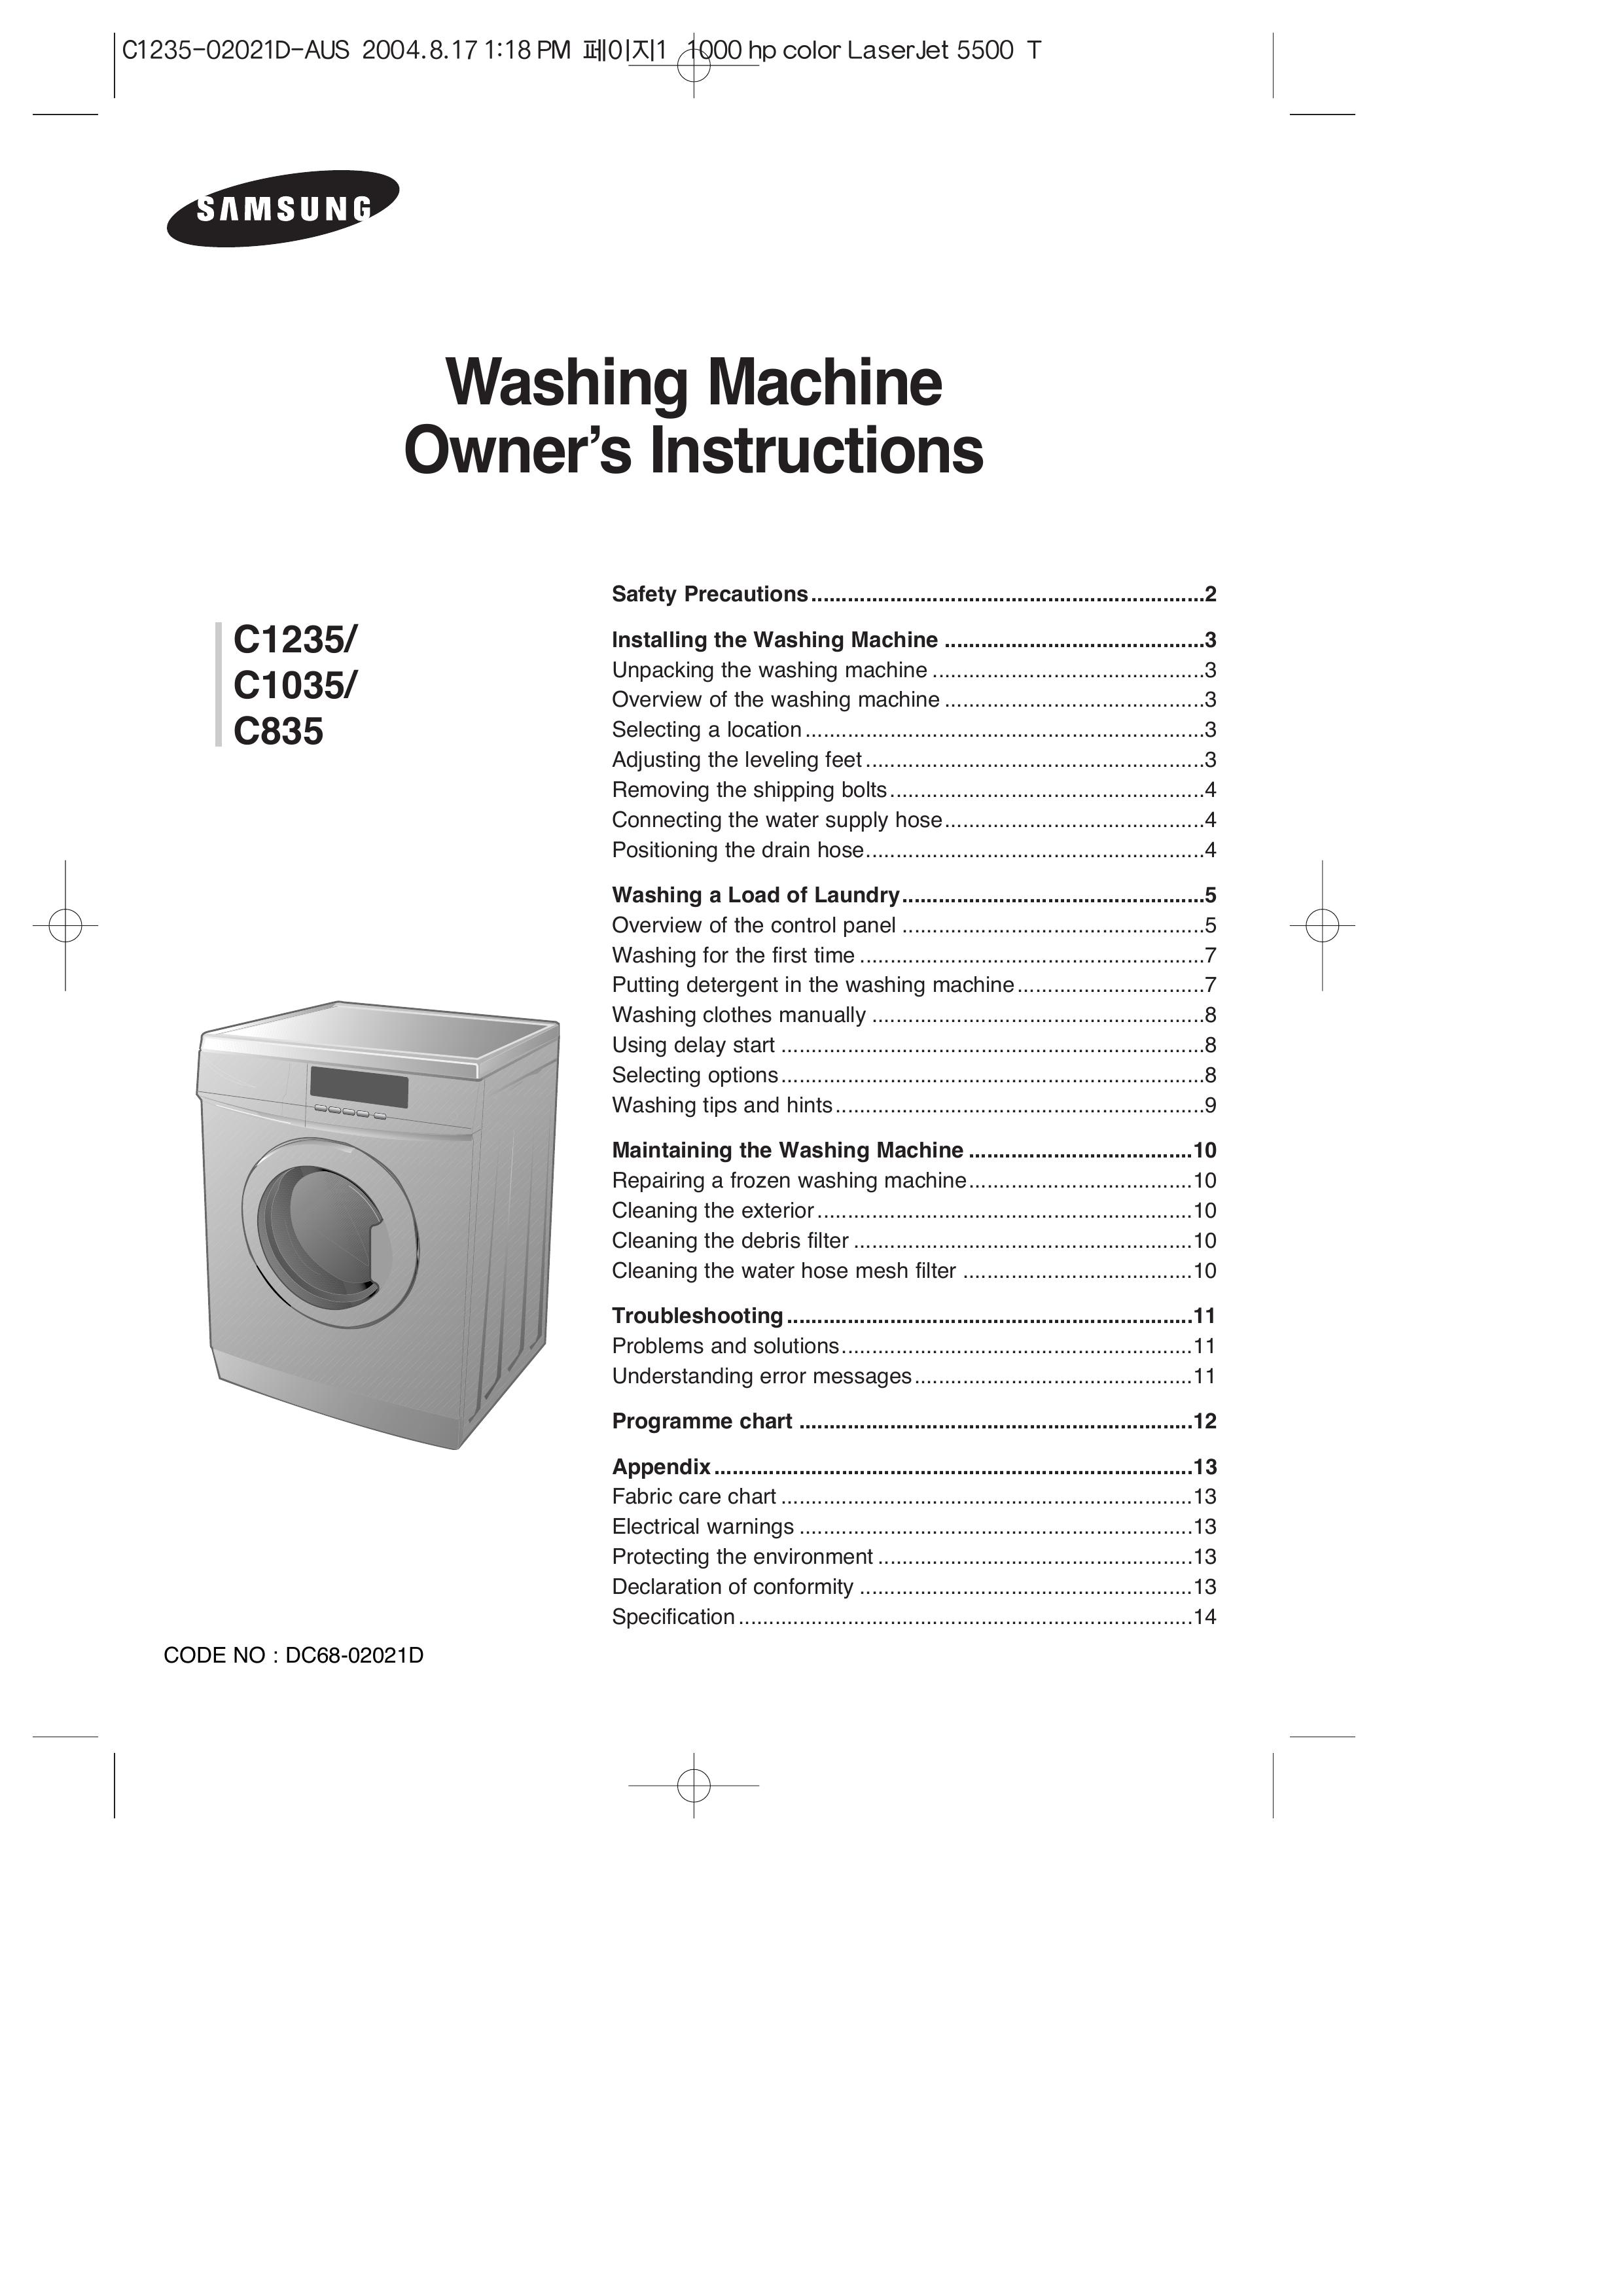 Samsung C835 Washer User Manual